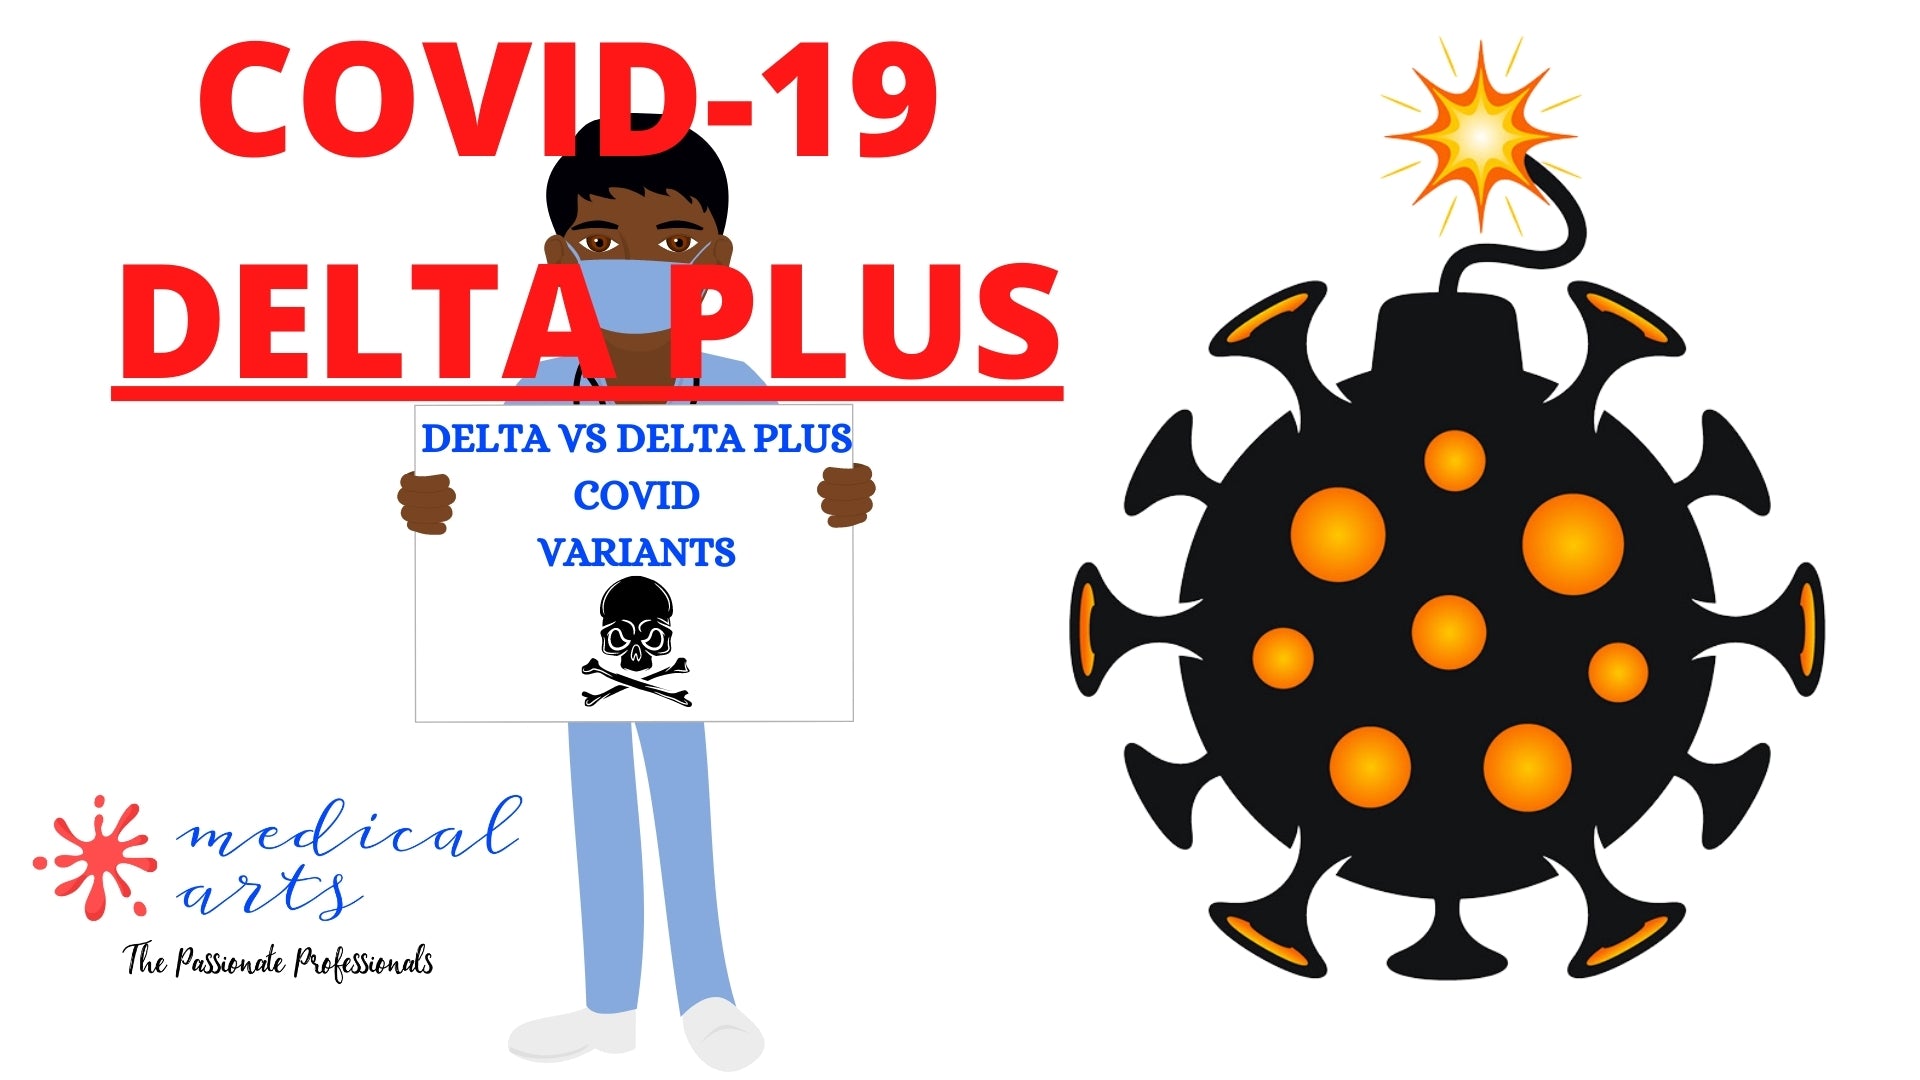 Delta and Delta Plus Variants covid-19 (coronavirus pandemic)